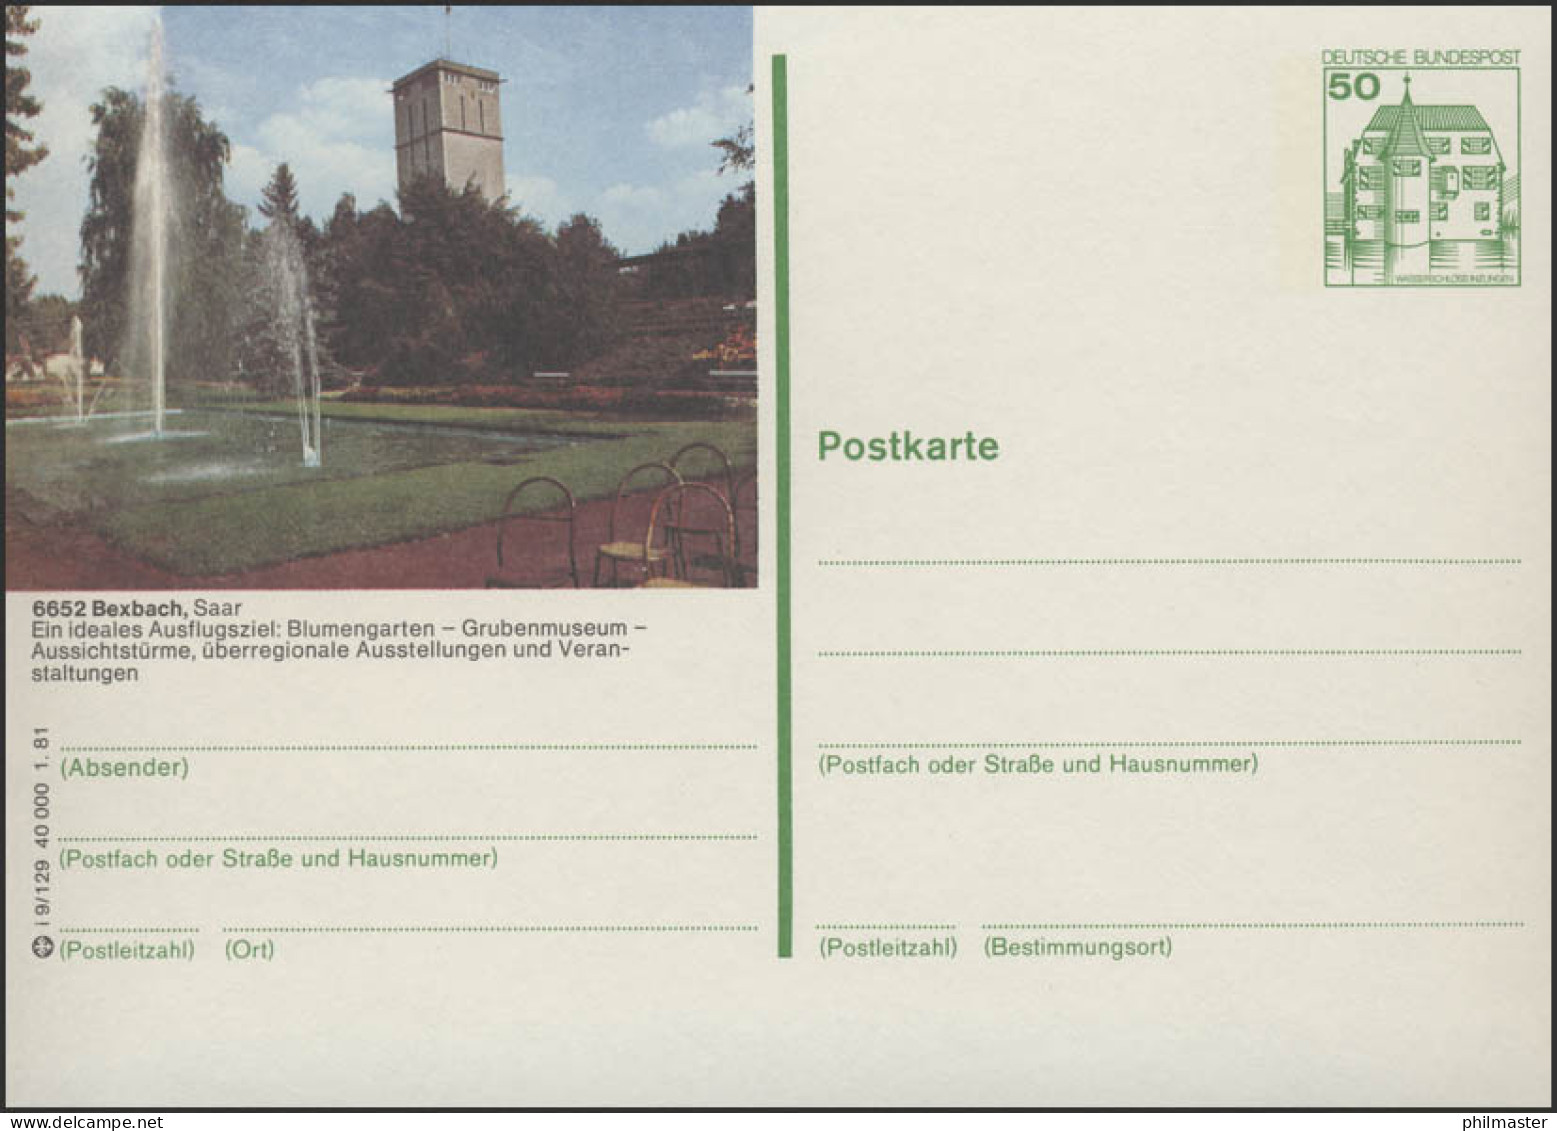 P134-i9/129 - 6652 Bexbach - Blumengarten Grubenmuseum ** - Cartoline Illustrate - Nuovi